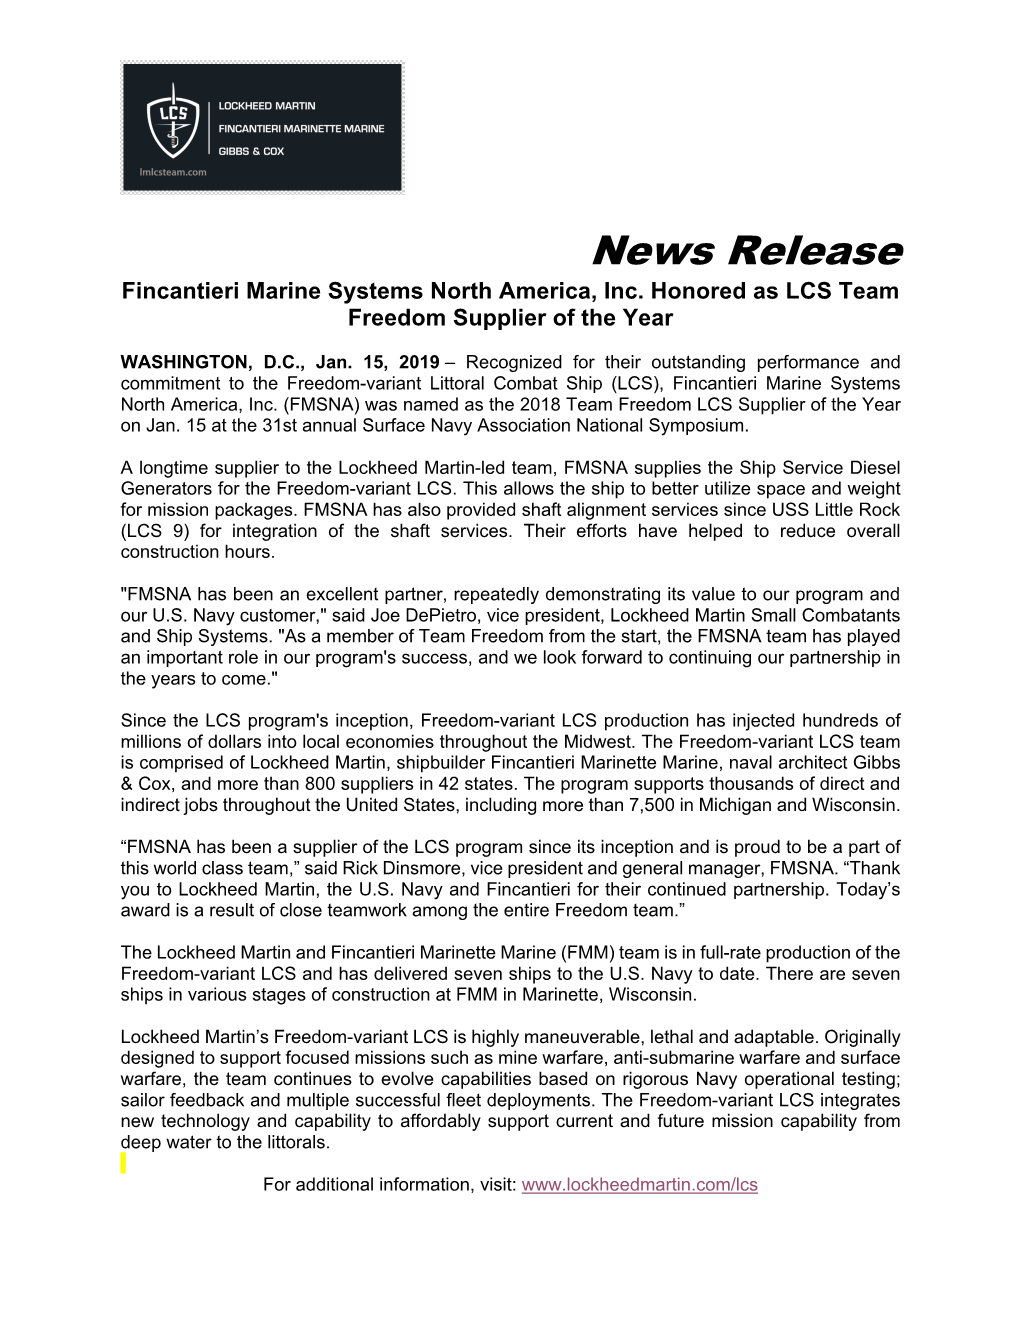 News Release Fincantieri Marine Systems North America, Inc